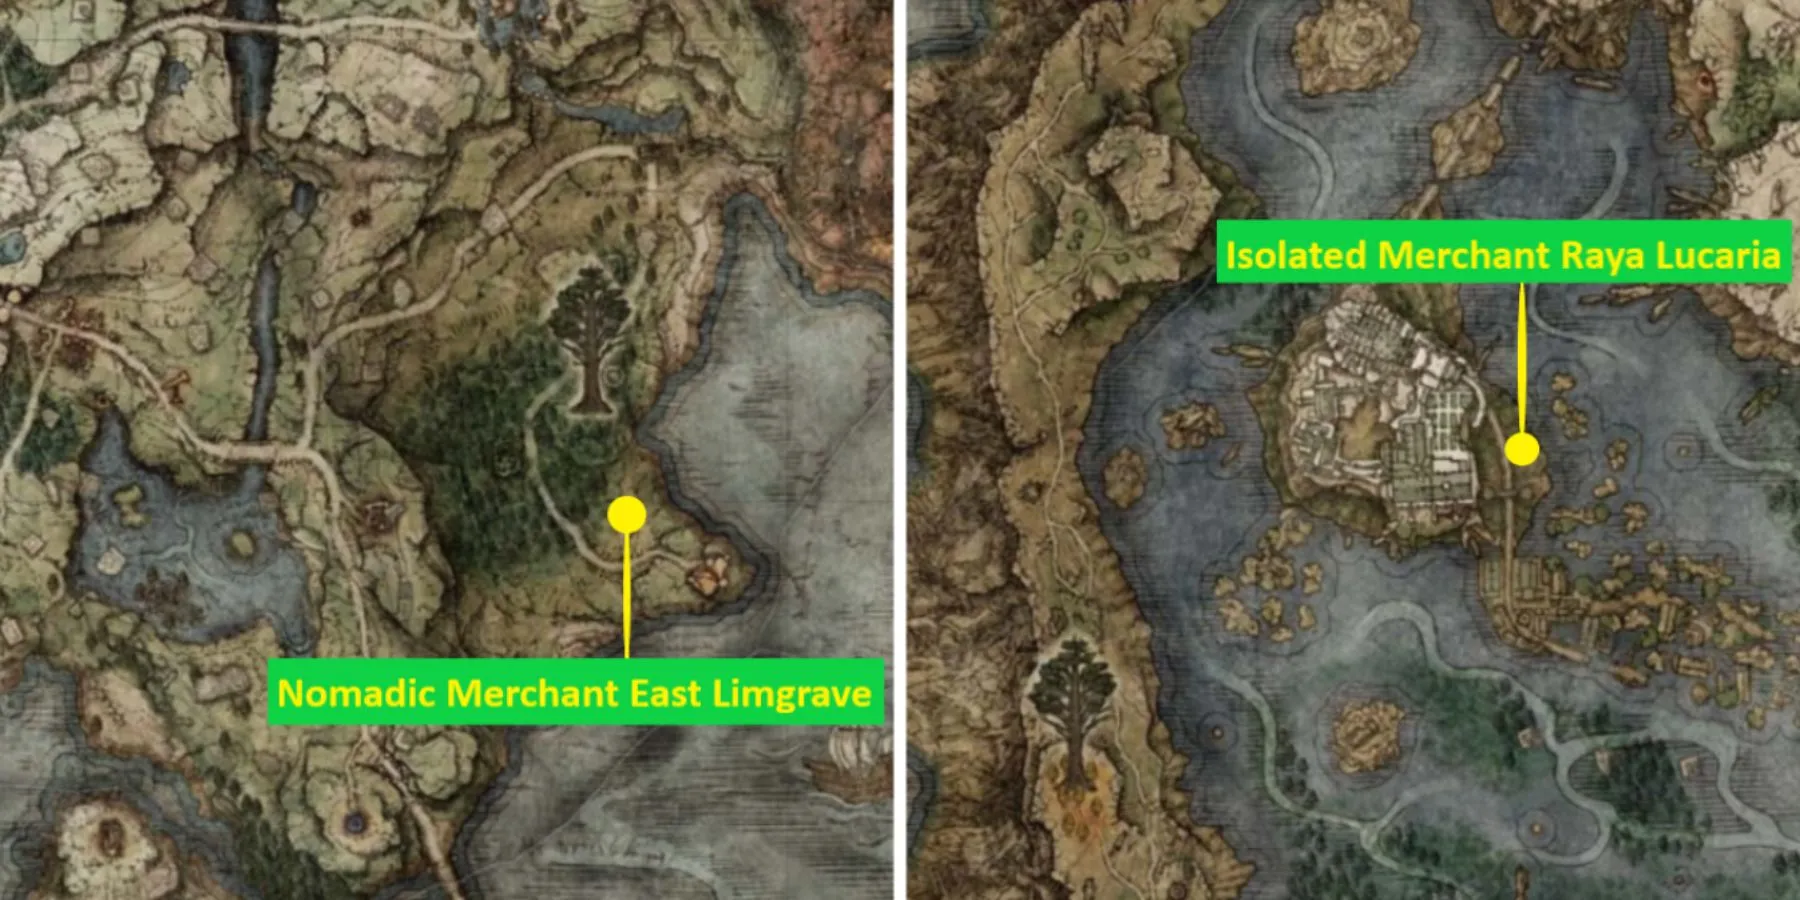 Nomadic Merchant East Limgrave and Isolated Merchant Raya Lucaria